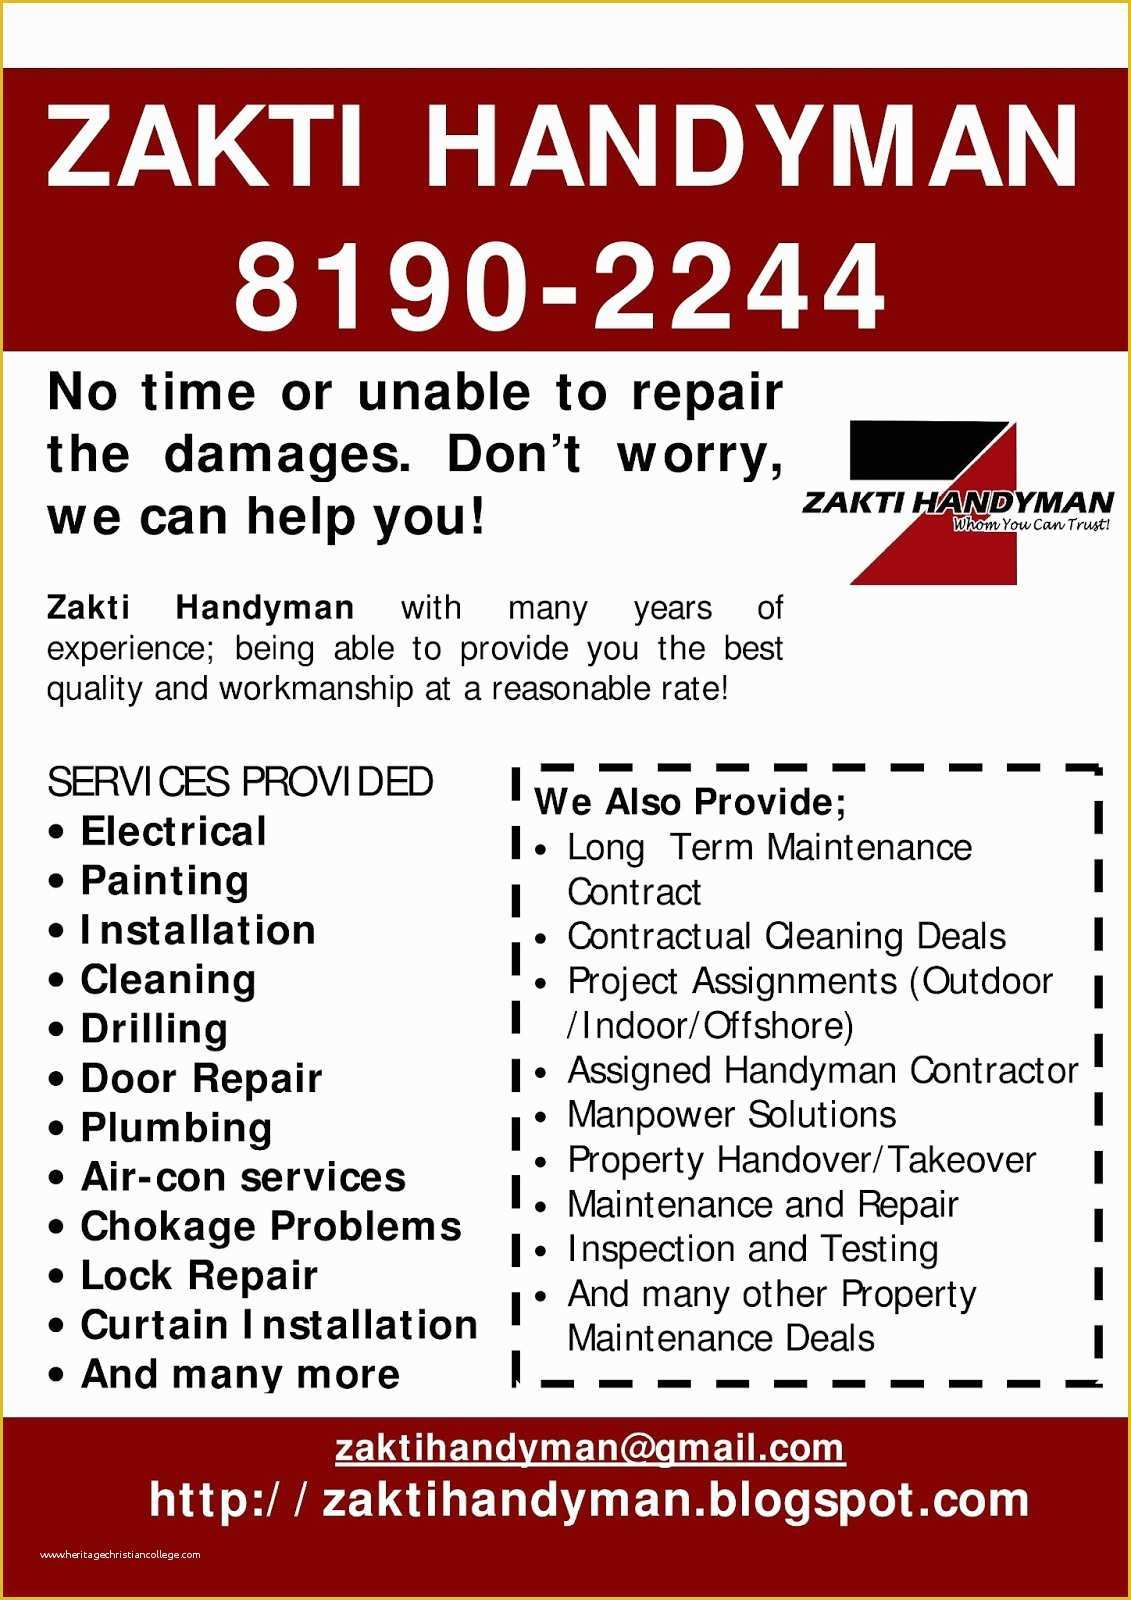 Home Improvement Flyer Template Free Of Zakti Handyman 8190 2244